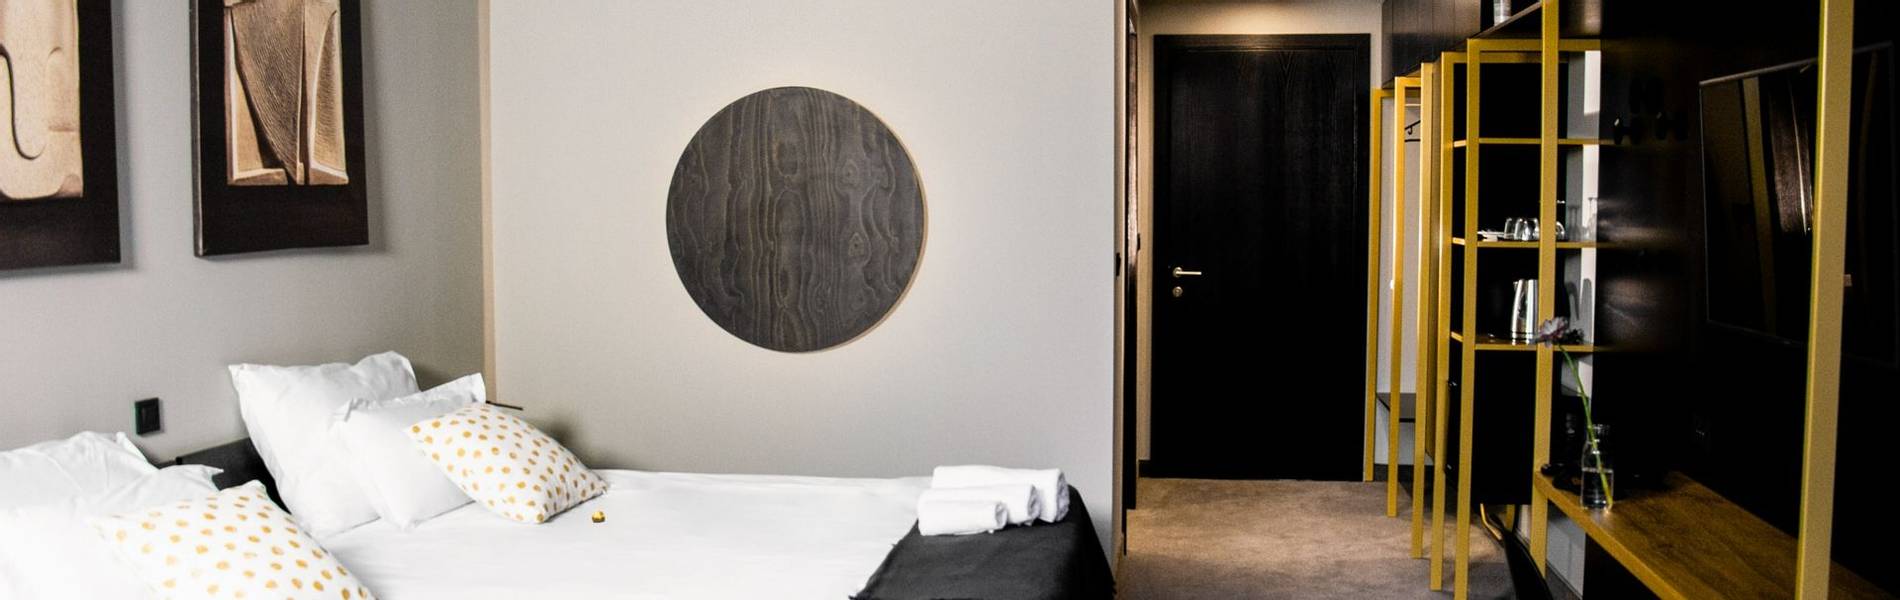 Hotel_Lyra_Plitvice_Room_2.jpg